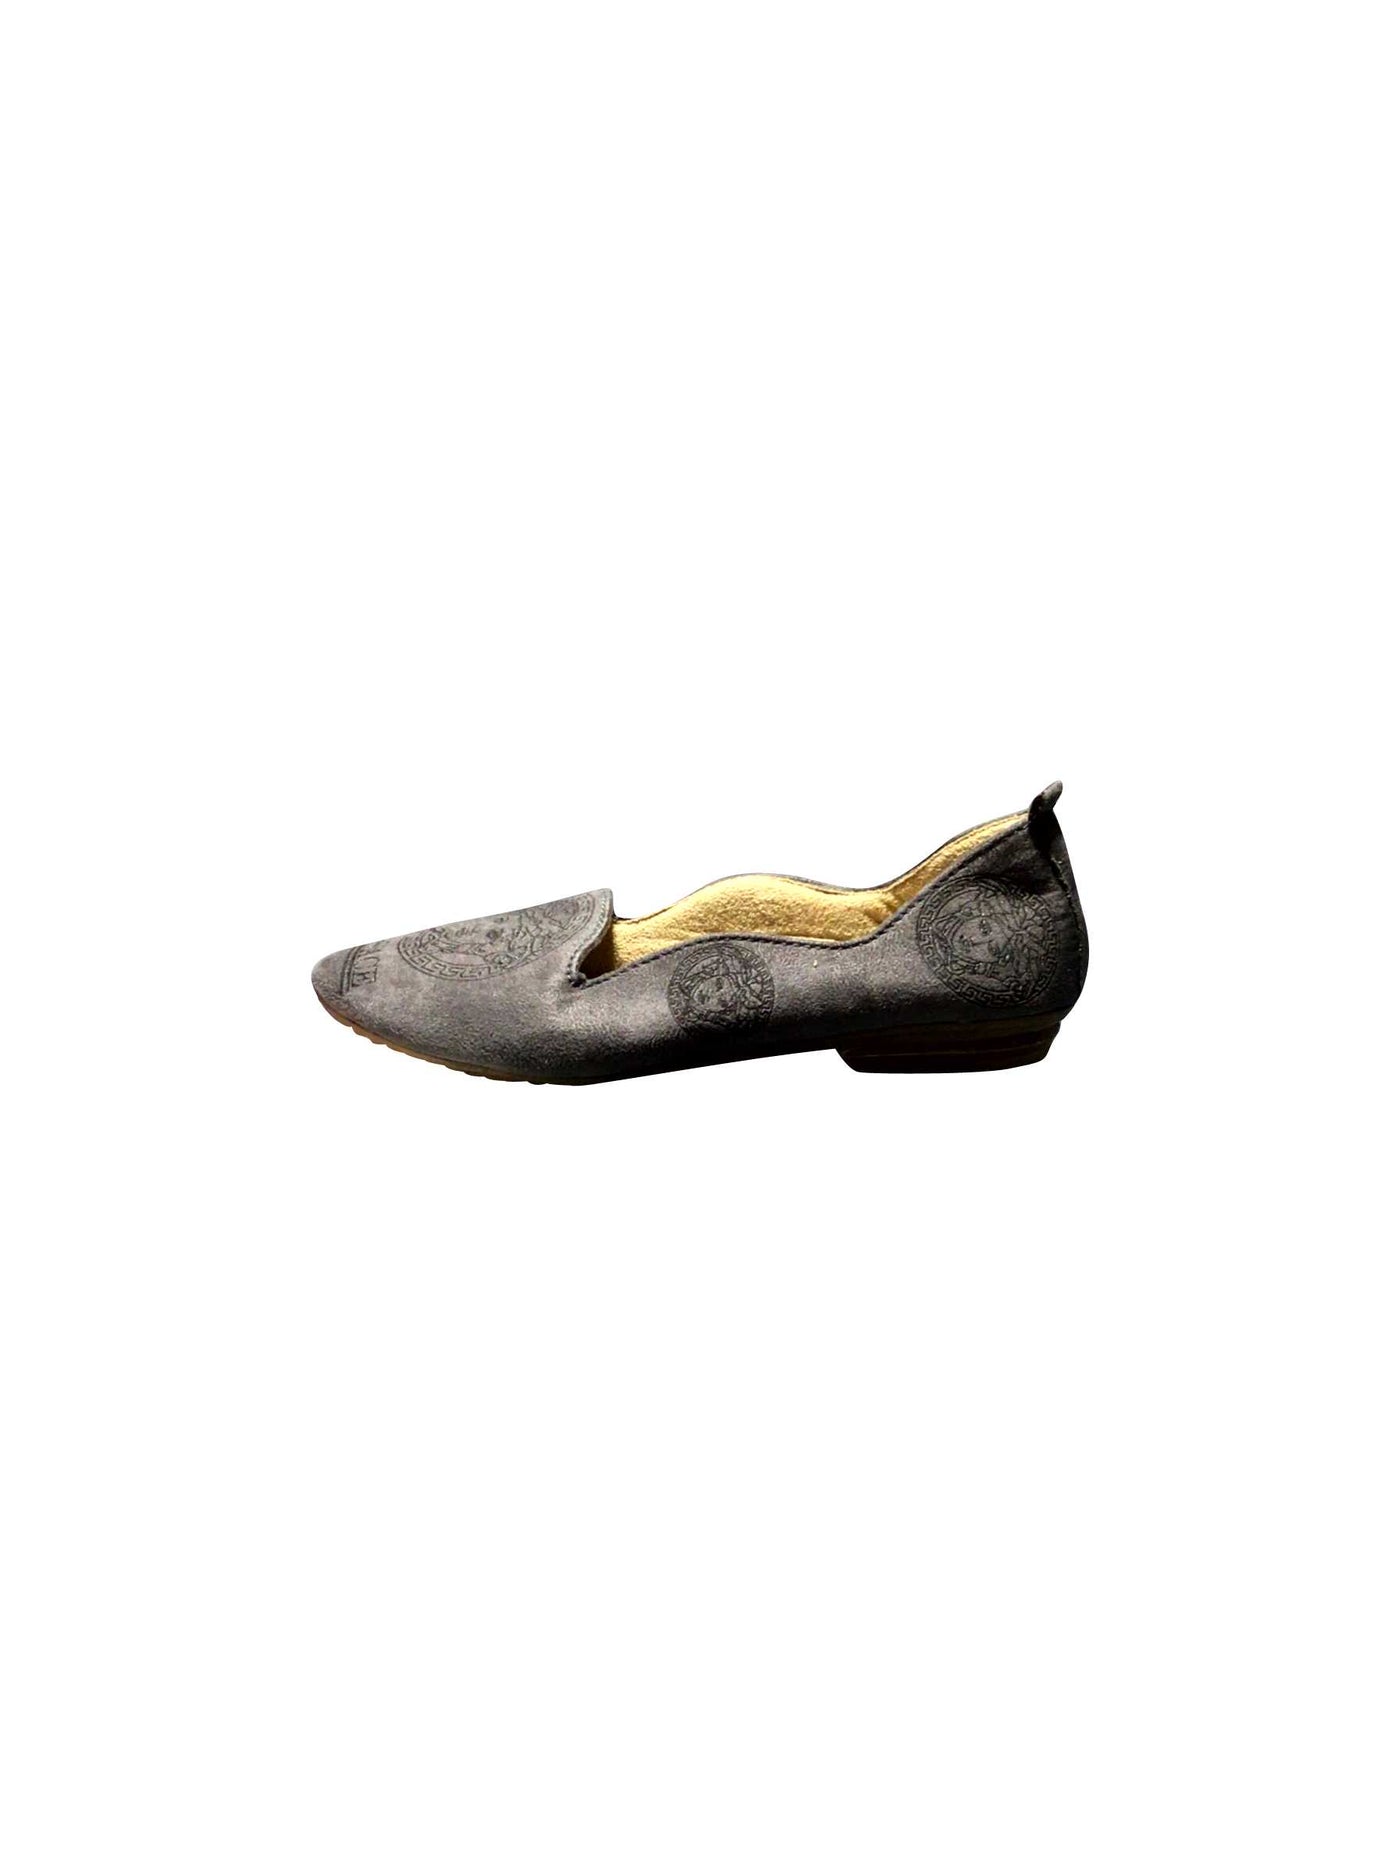 UNBRANDED Regular fit Flats Shoes in Gray - Size 38 | 8.99 $ KOOP